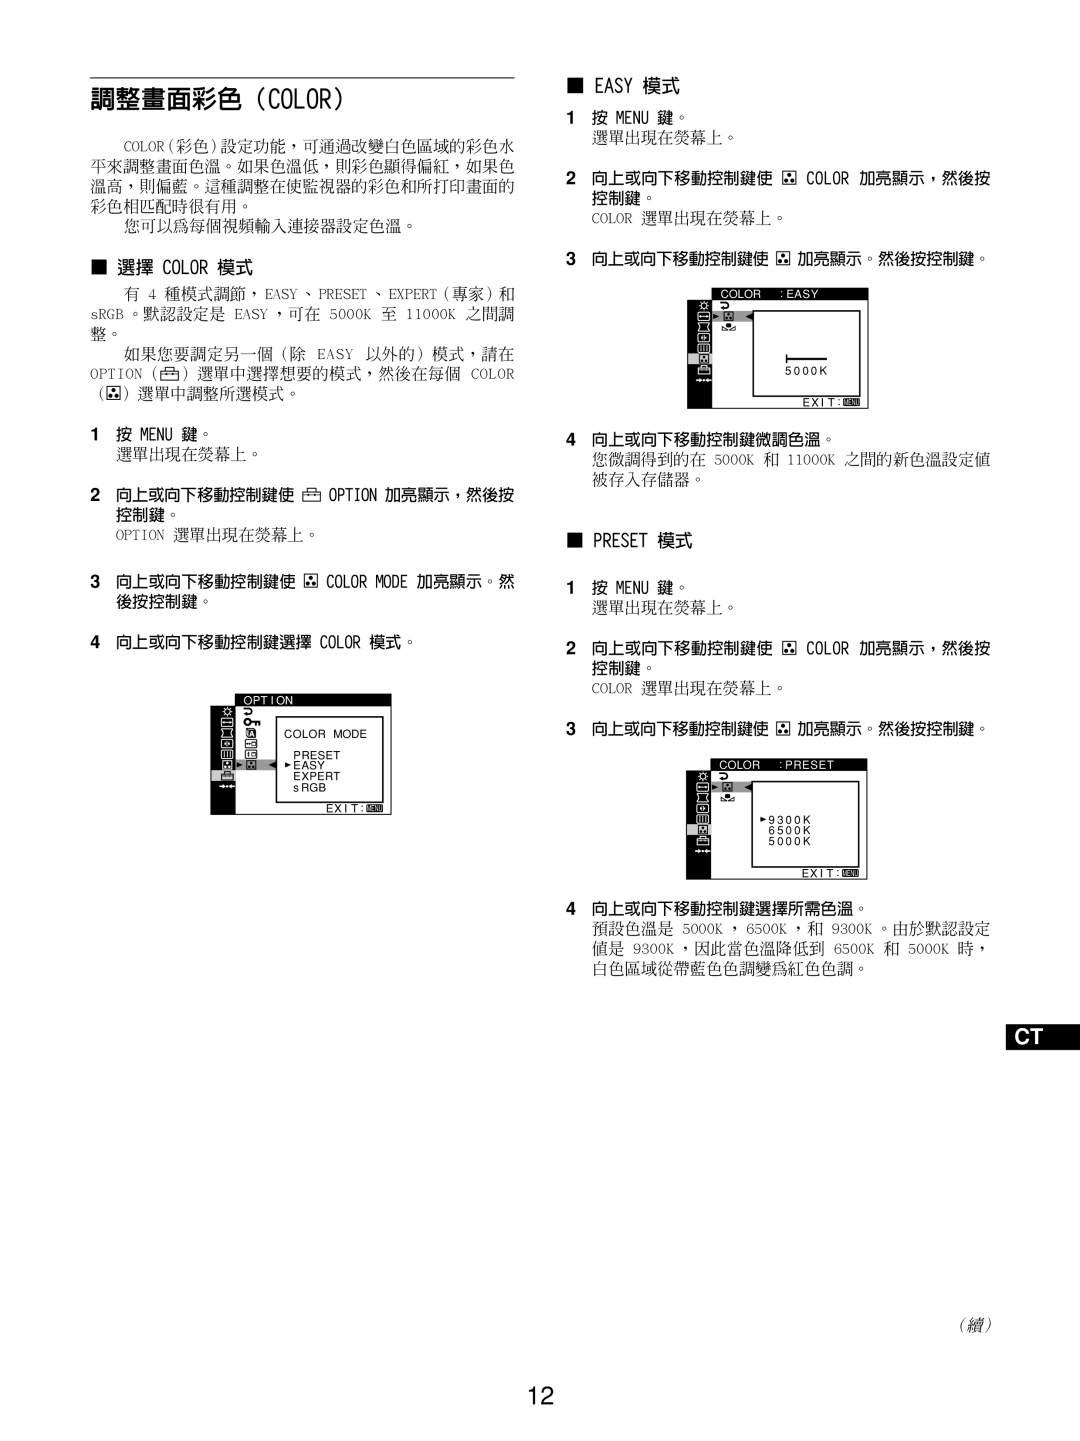 Sony GDM-5510 調整畫面彩色（Color）, Easy 模式, 選擇 Color 模式, Preset 模式, 1 按 MENU 鍵。, 2 向上或向下移動控制鍵使 OPTION 加亮顯示，然後按 控制鍵。 